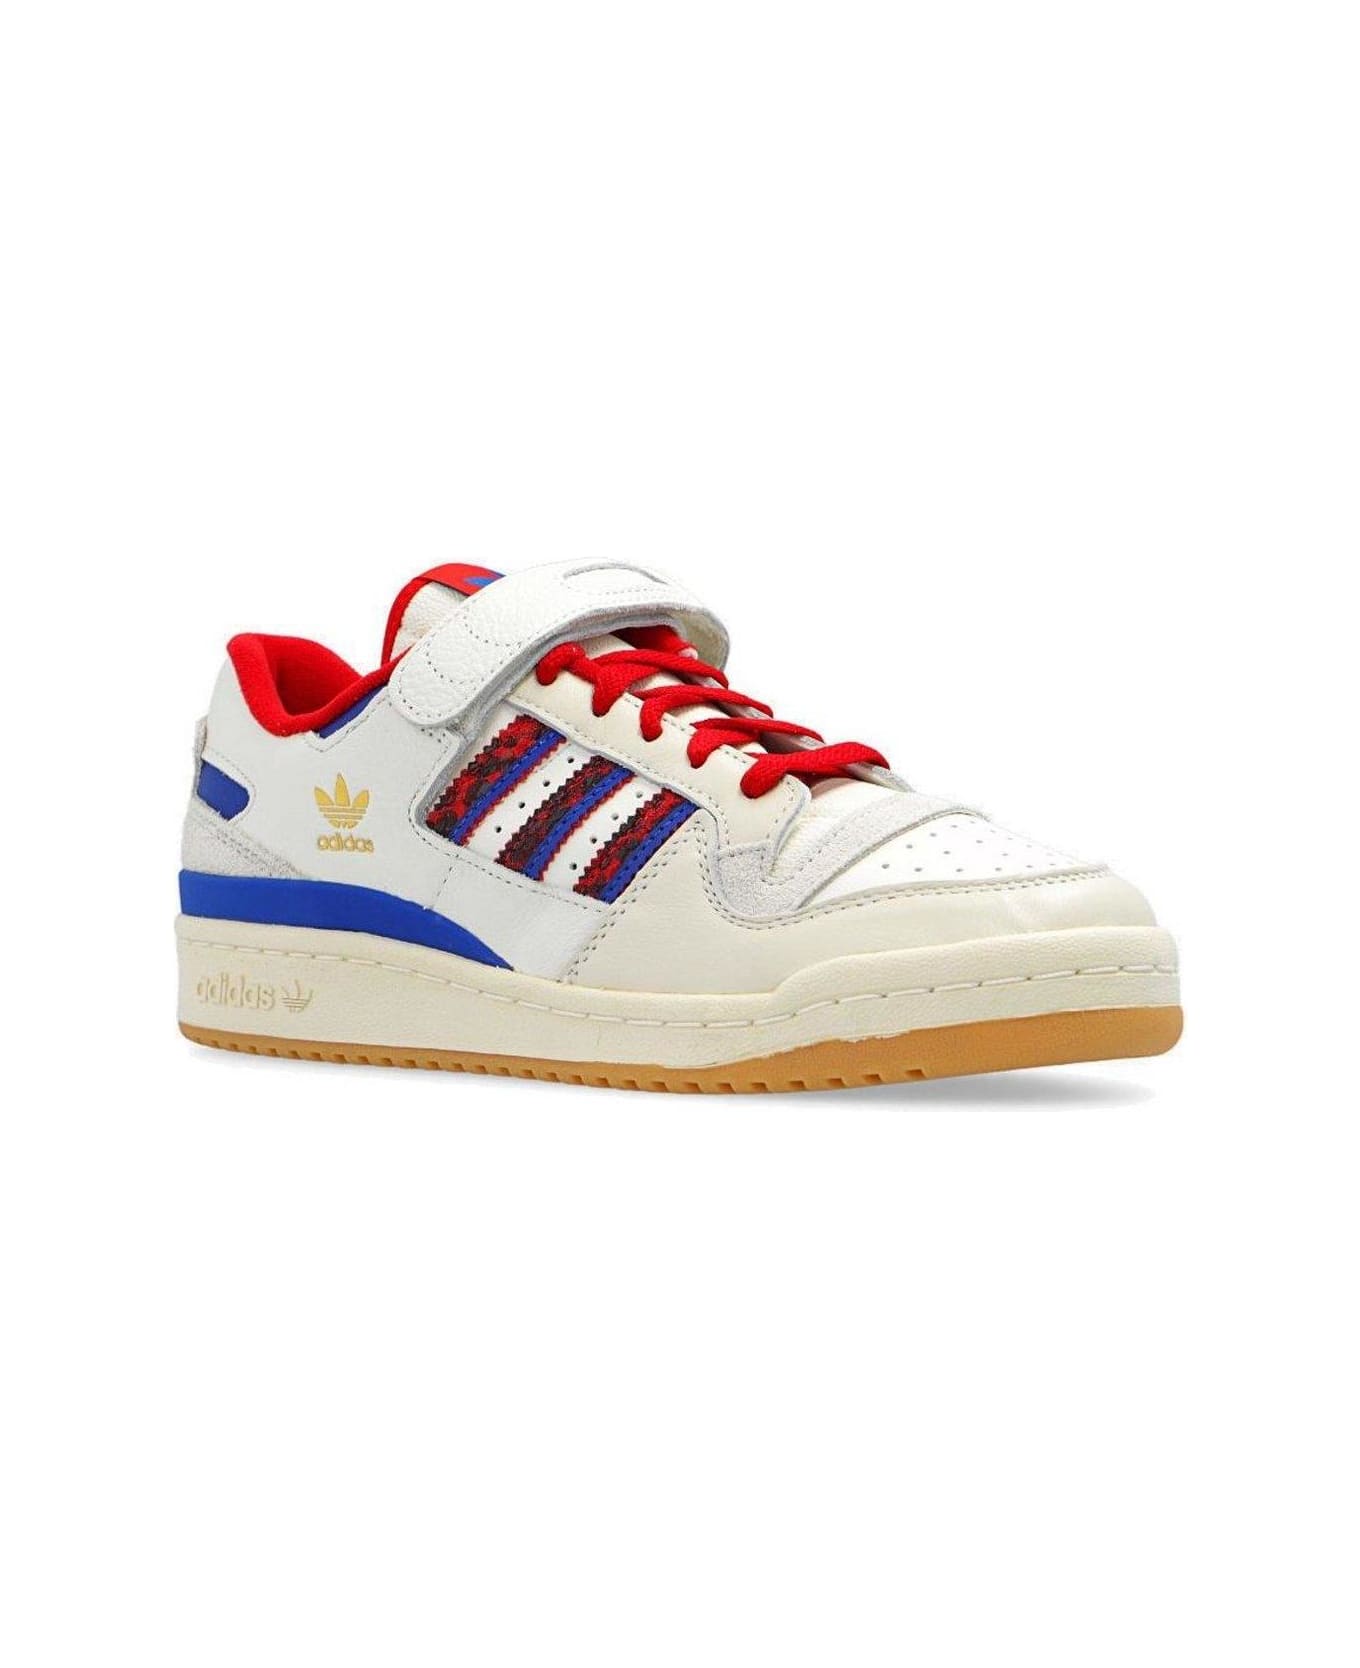 Adidas Originals Forum 84 Low-top Sneakers - White